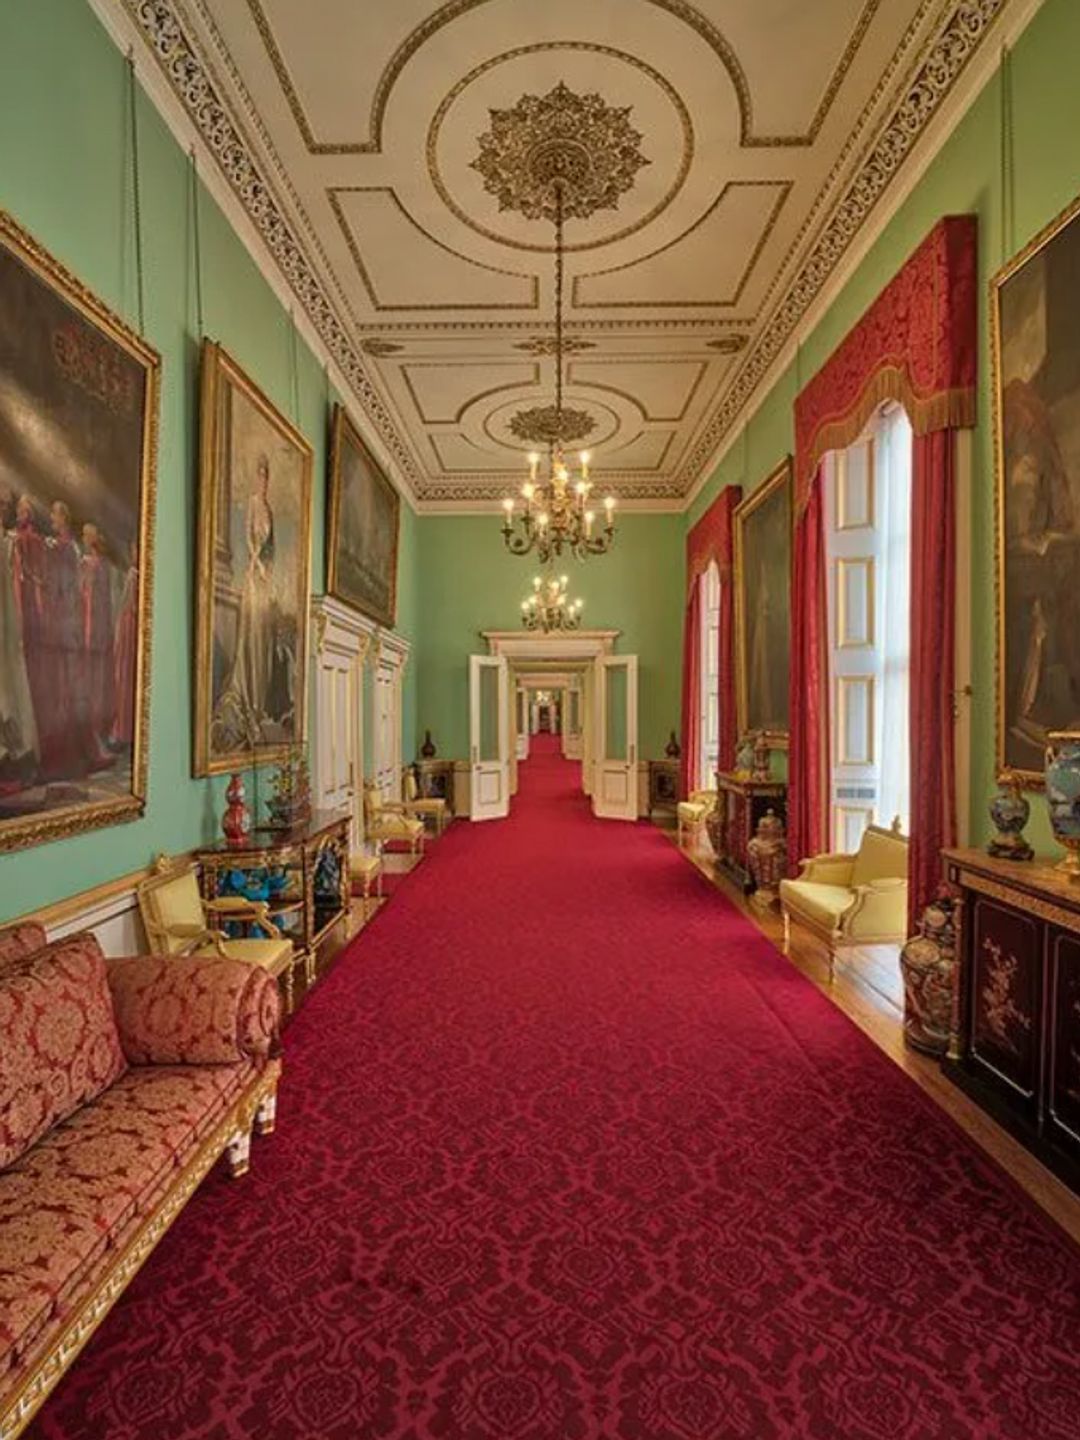 The Principal Corridor inside Buckingham Palace